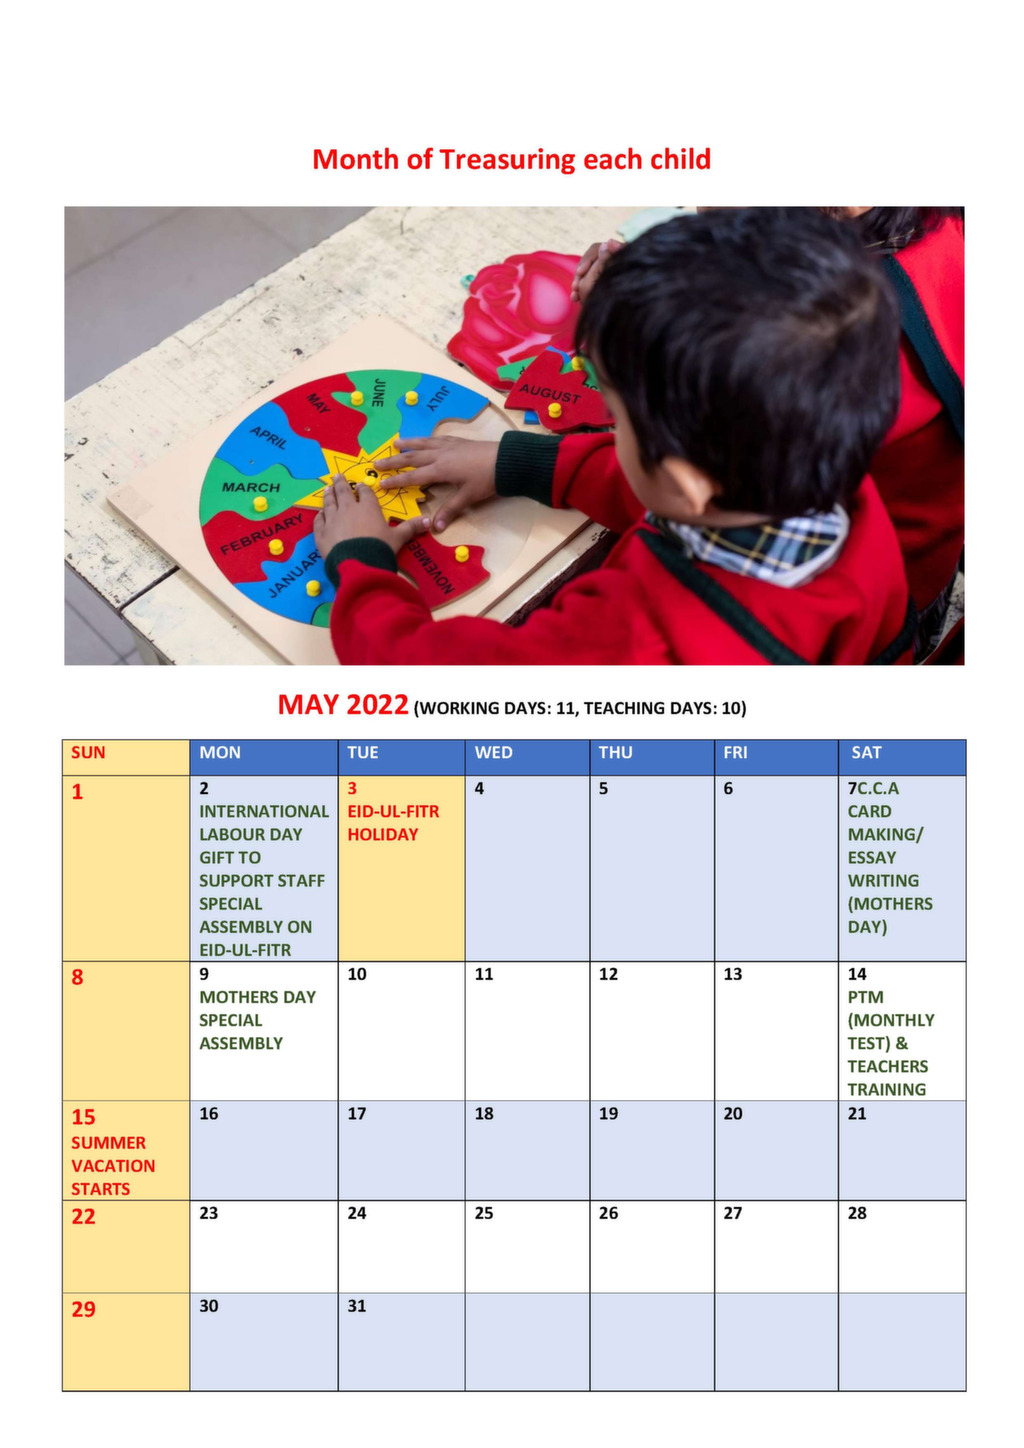 annual-calendar-2022-23-st-xavier-s-high-school-vyapar-vihar-bilaspur